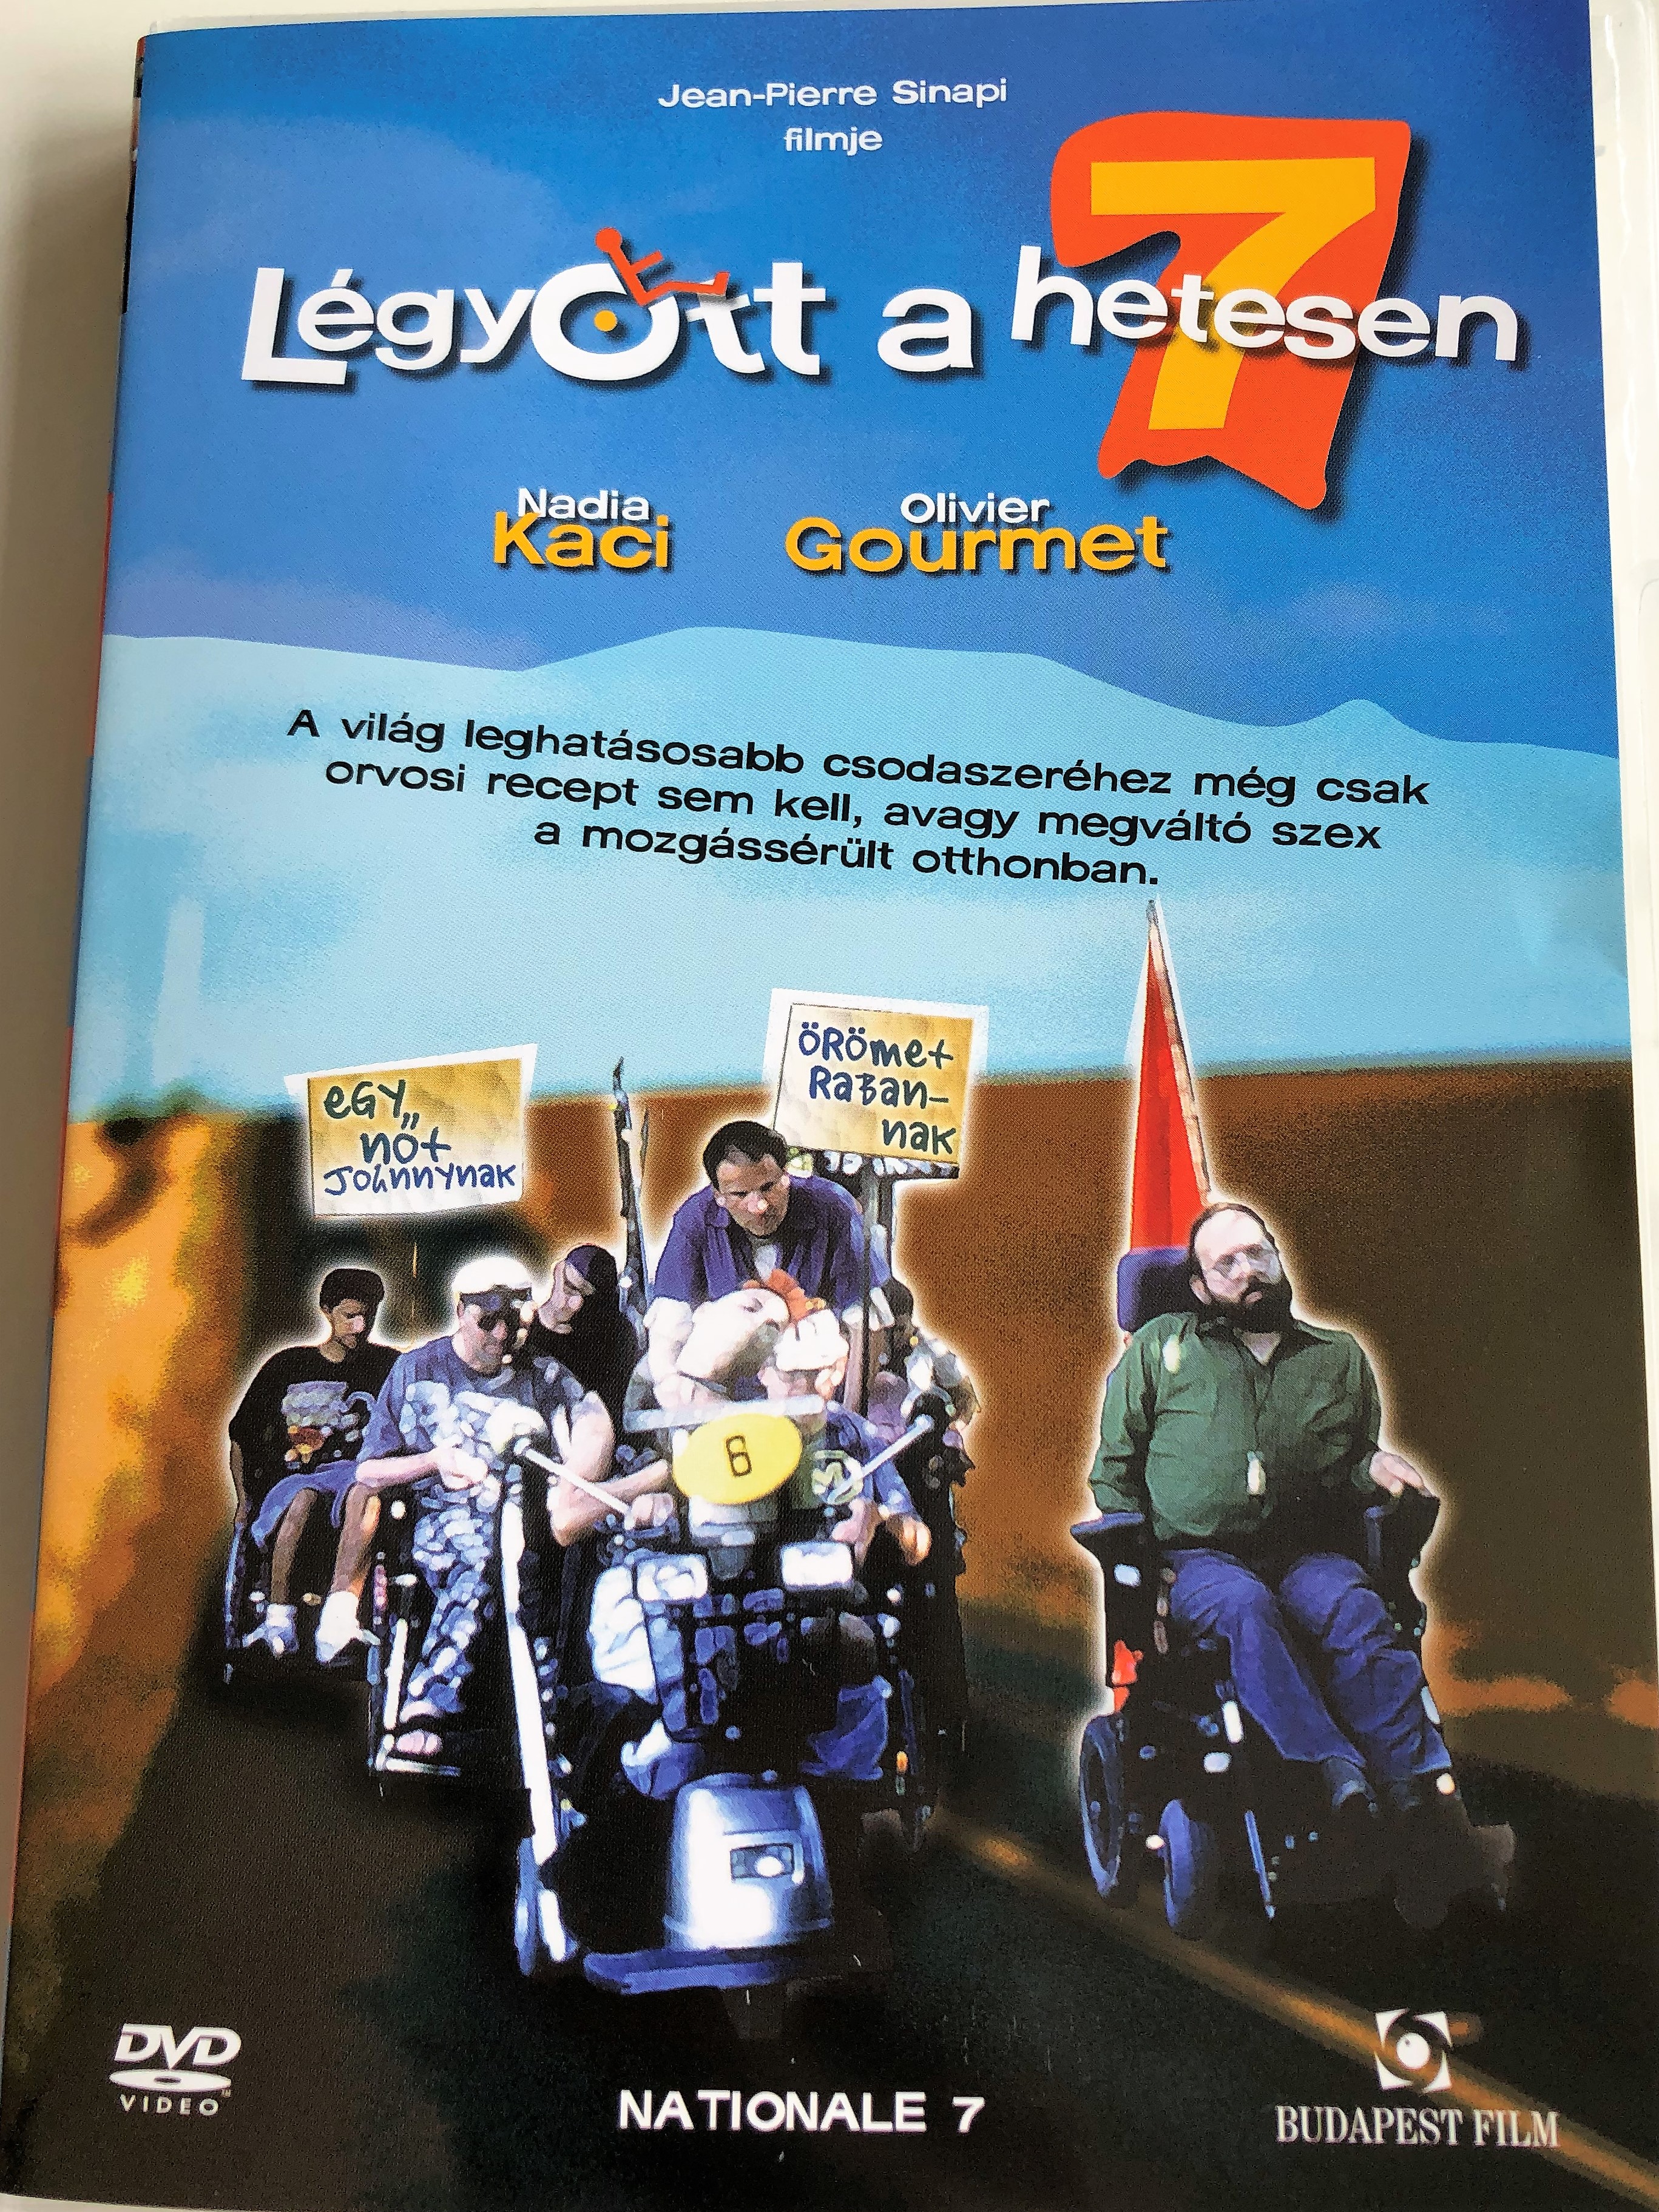 nationale-7-dvd-2000-l-gyott-a-hetesen-directed-by-jean-pierre-sinapi-starring-nadia-kaci-olivier-gourmet-1-.jpg